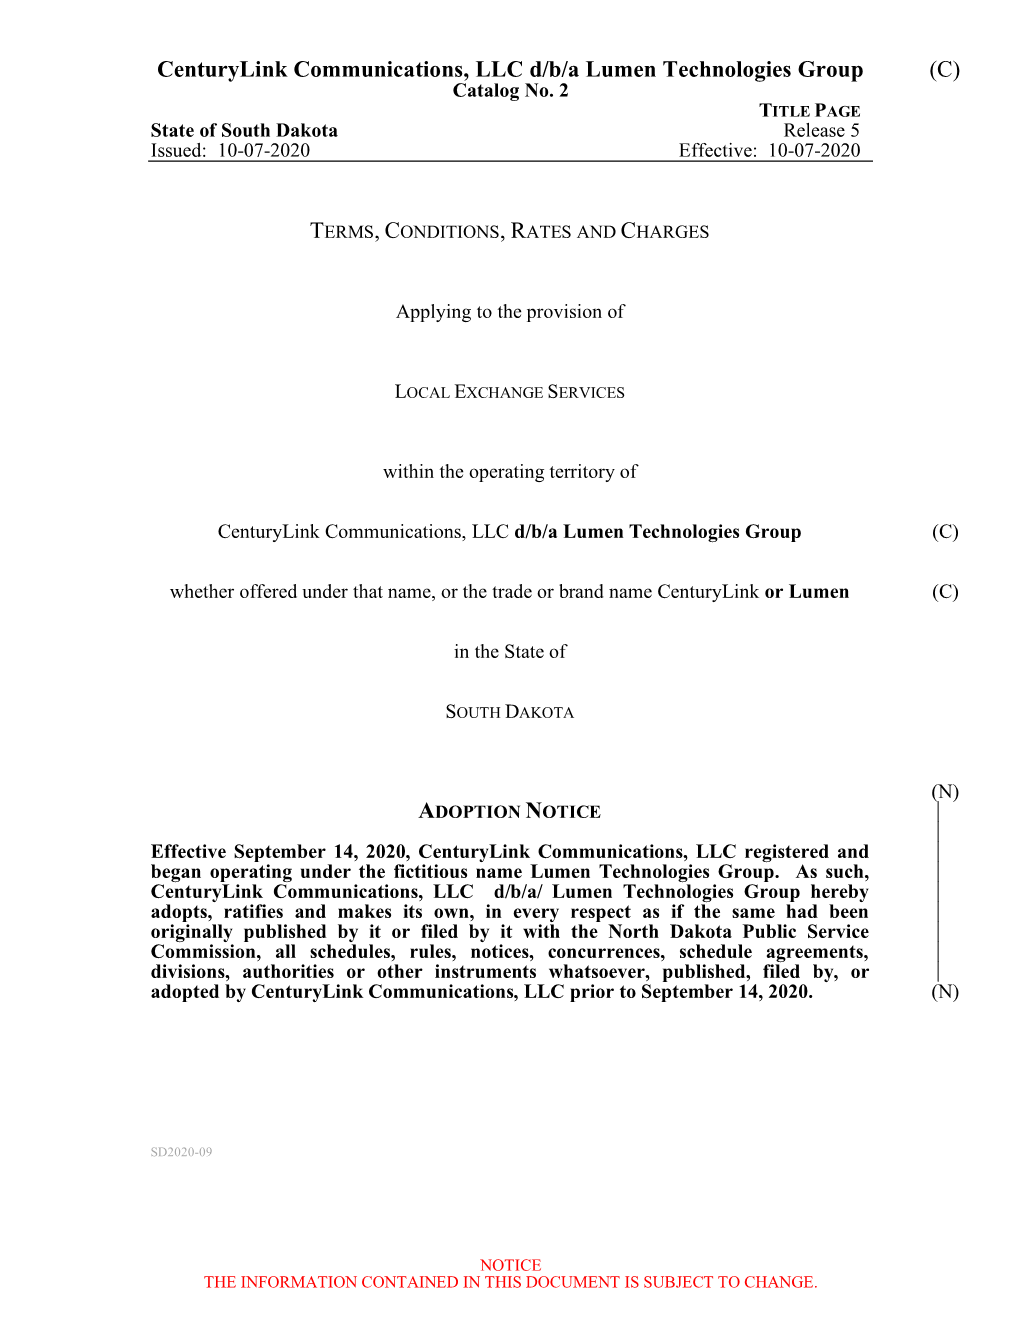 Centurylink Communications, LLC D/B/A Lumen Technologies Group (C) Catalog No